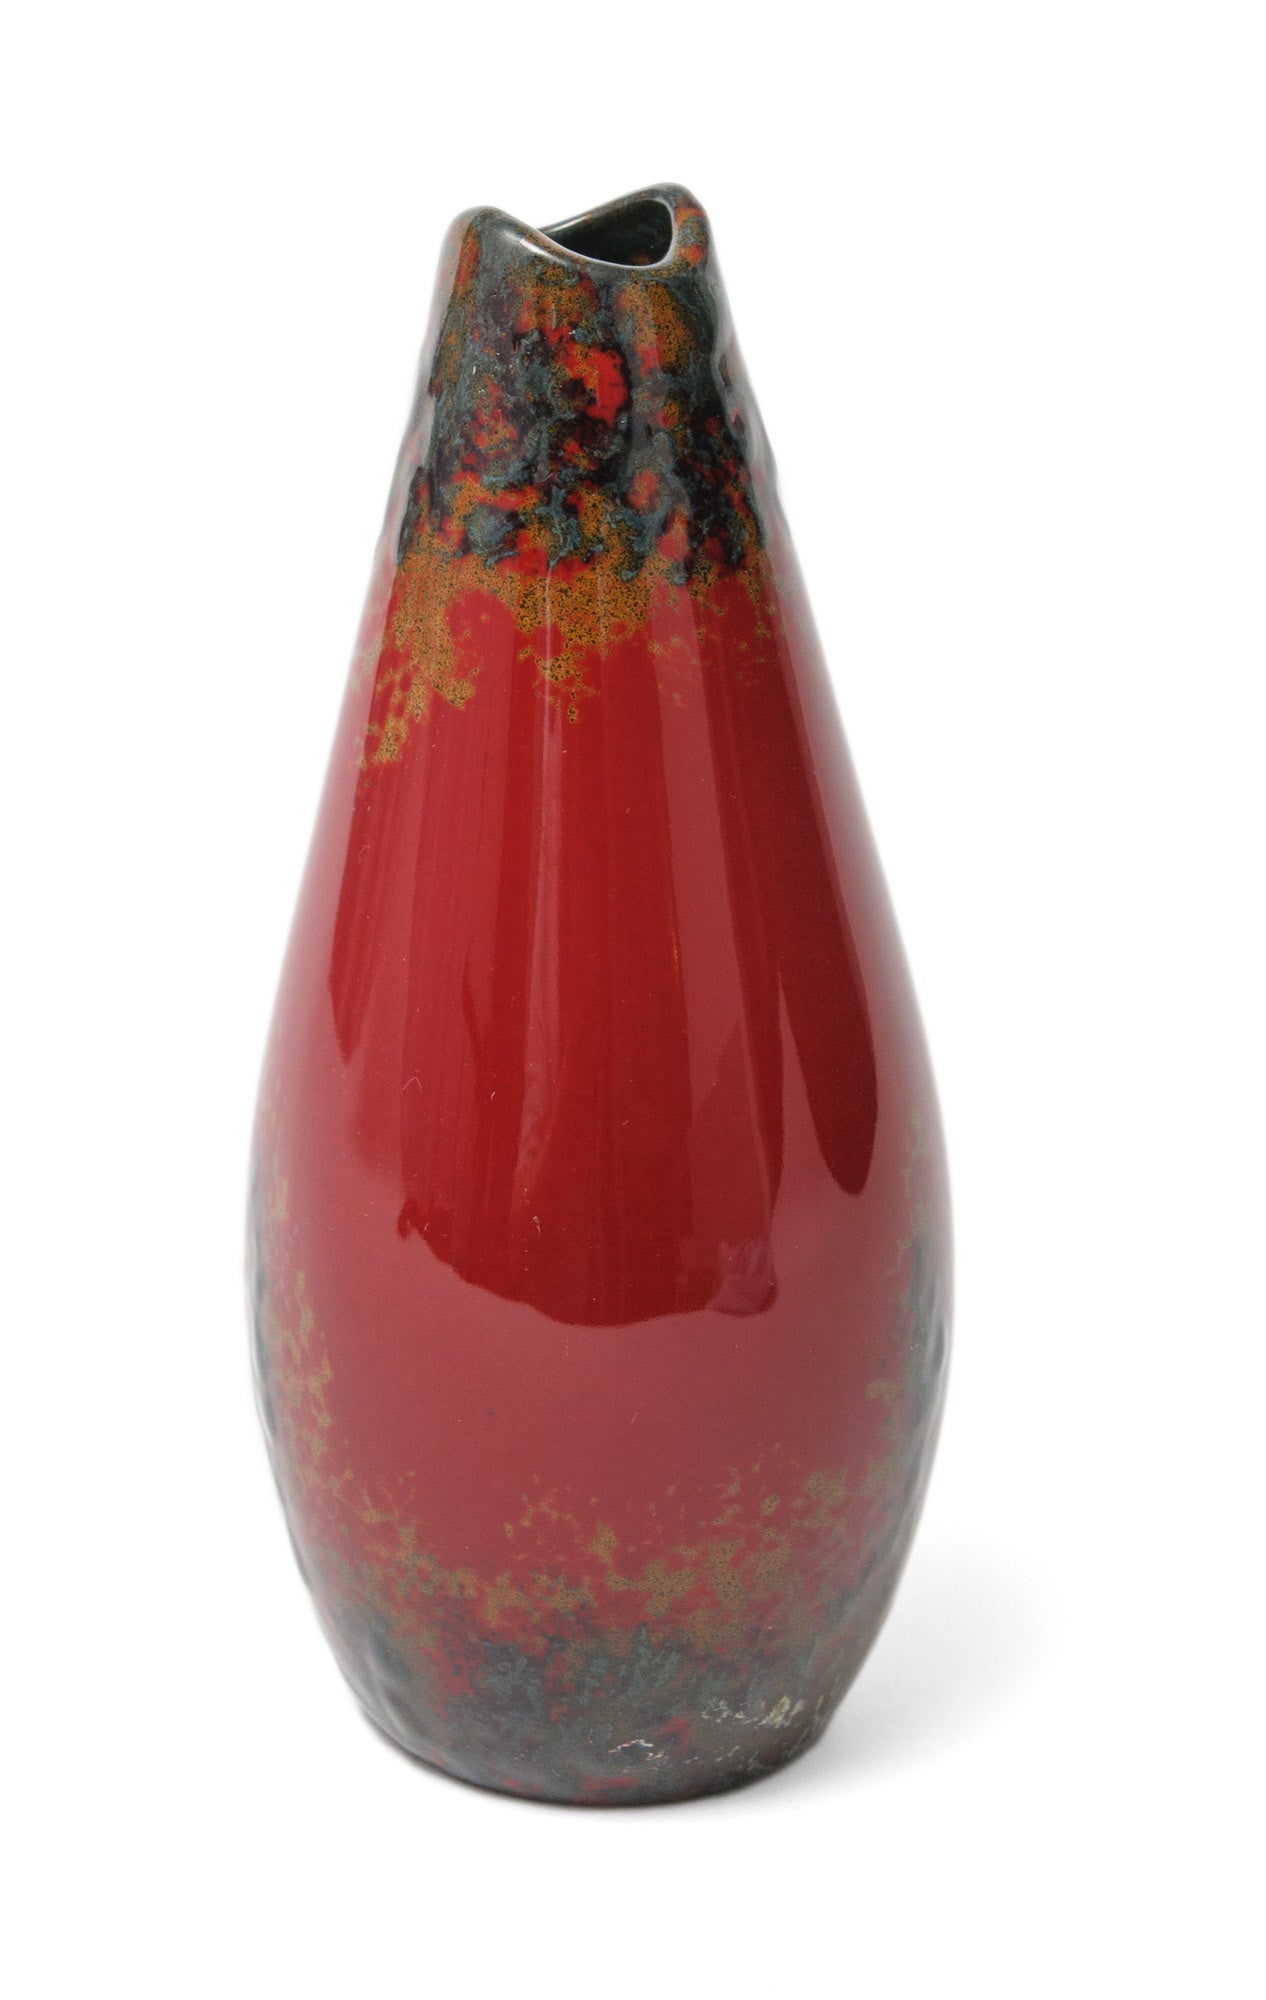 2004 Centenary Edition Royal Doulton China Flambe Sung Glaze Effect Vase (Code 1077)